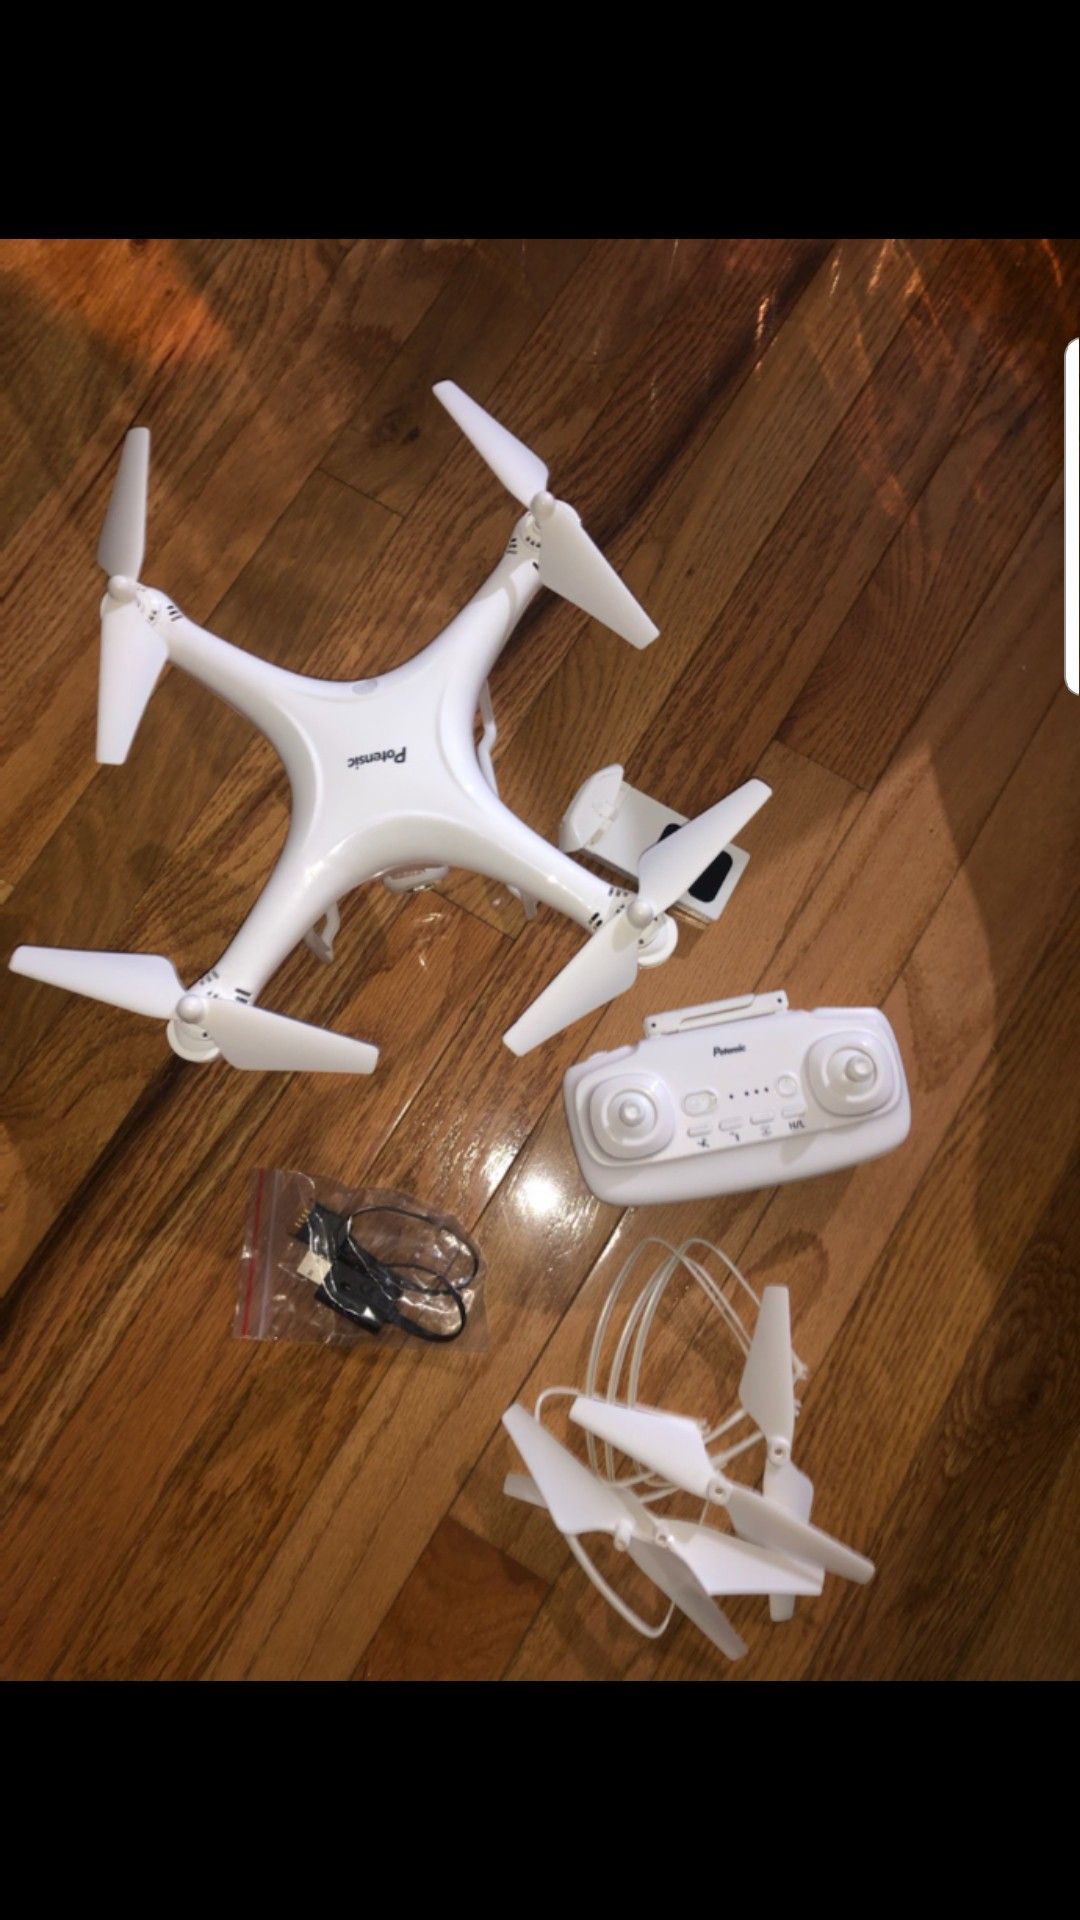 Potensic d58 drone